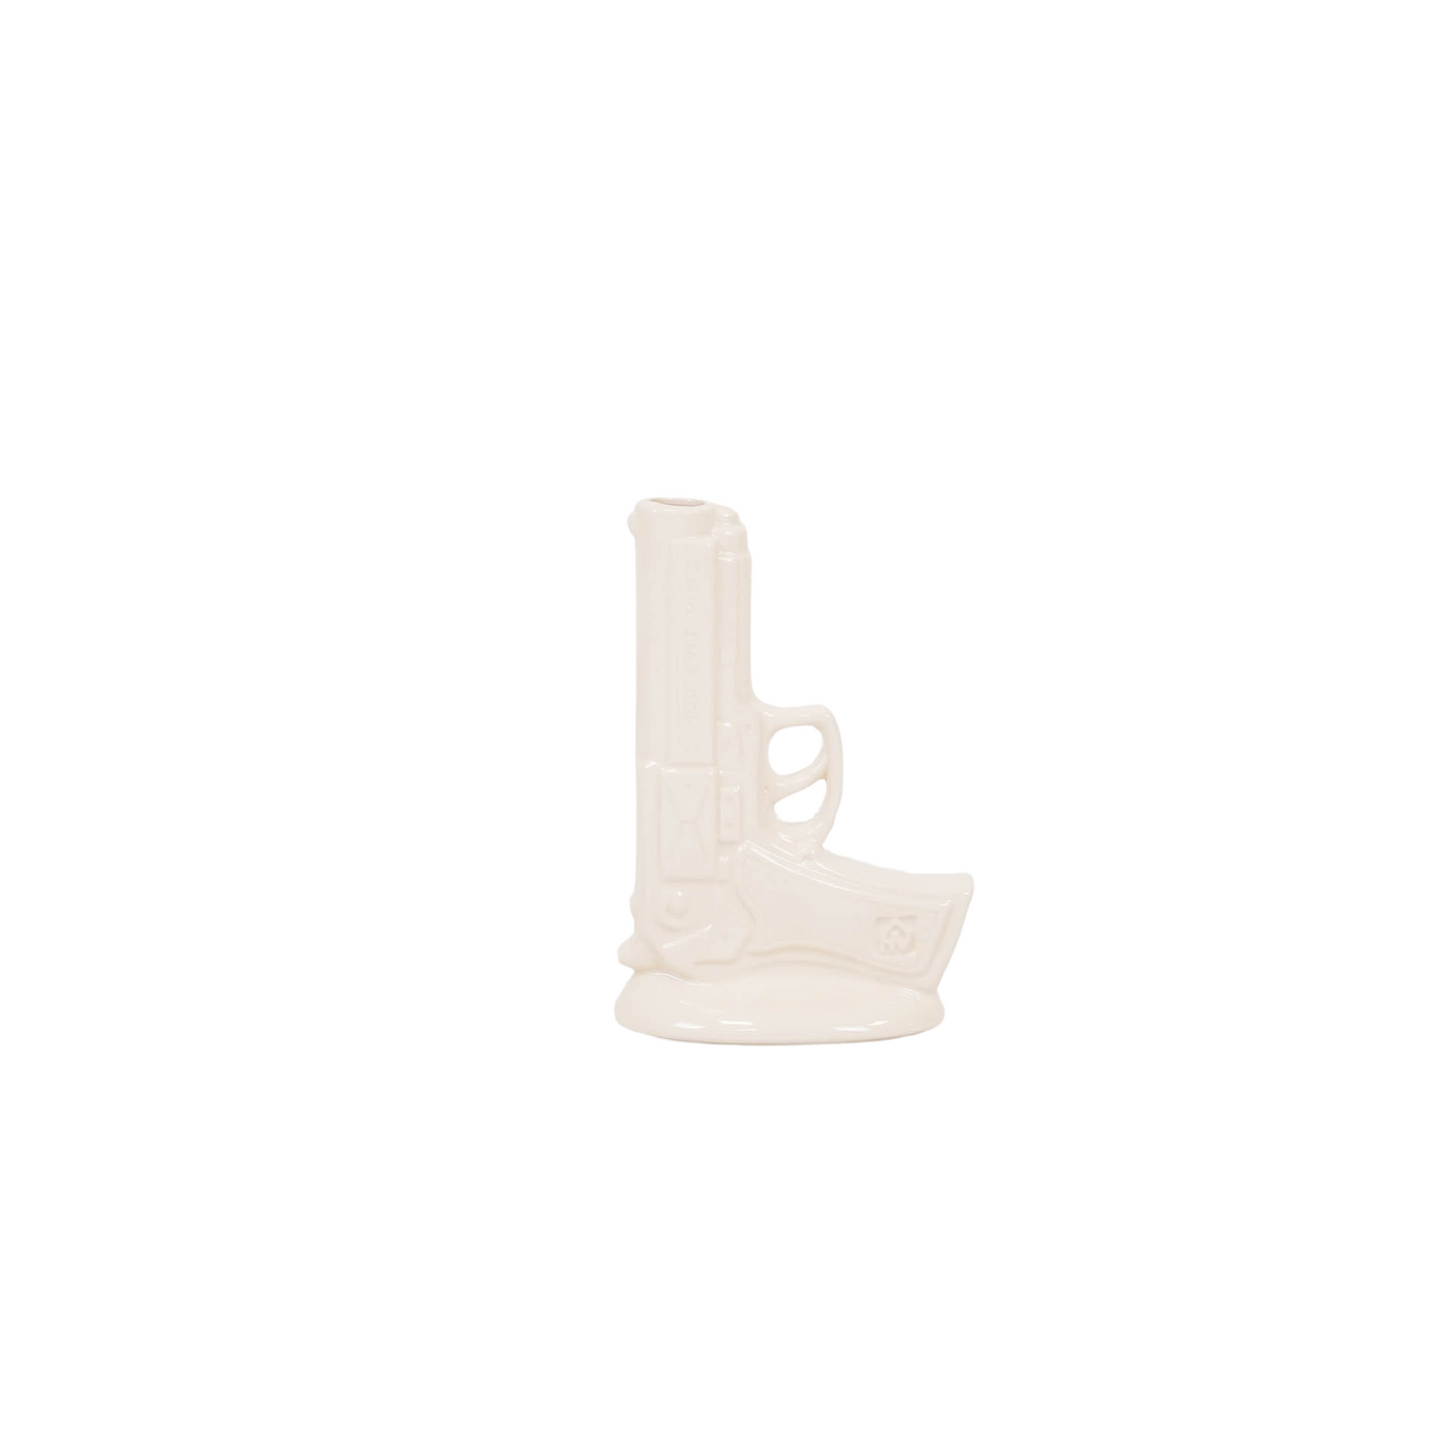 Vase - Gun - Ceramics - White - 15x9x23cm